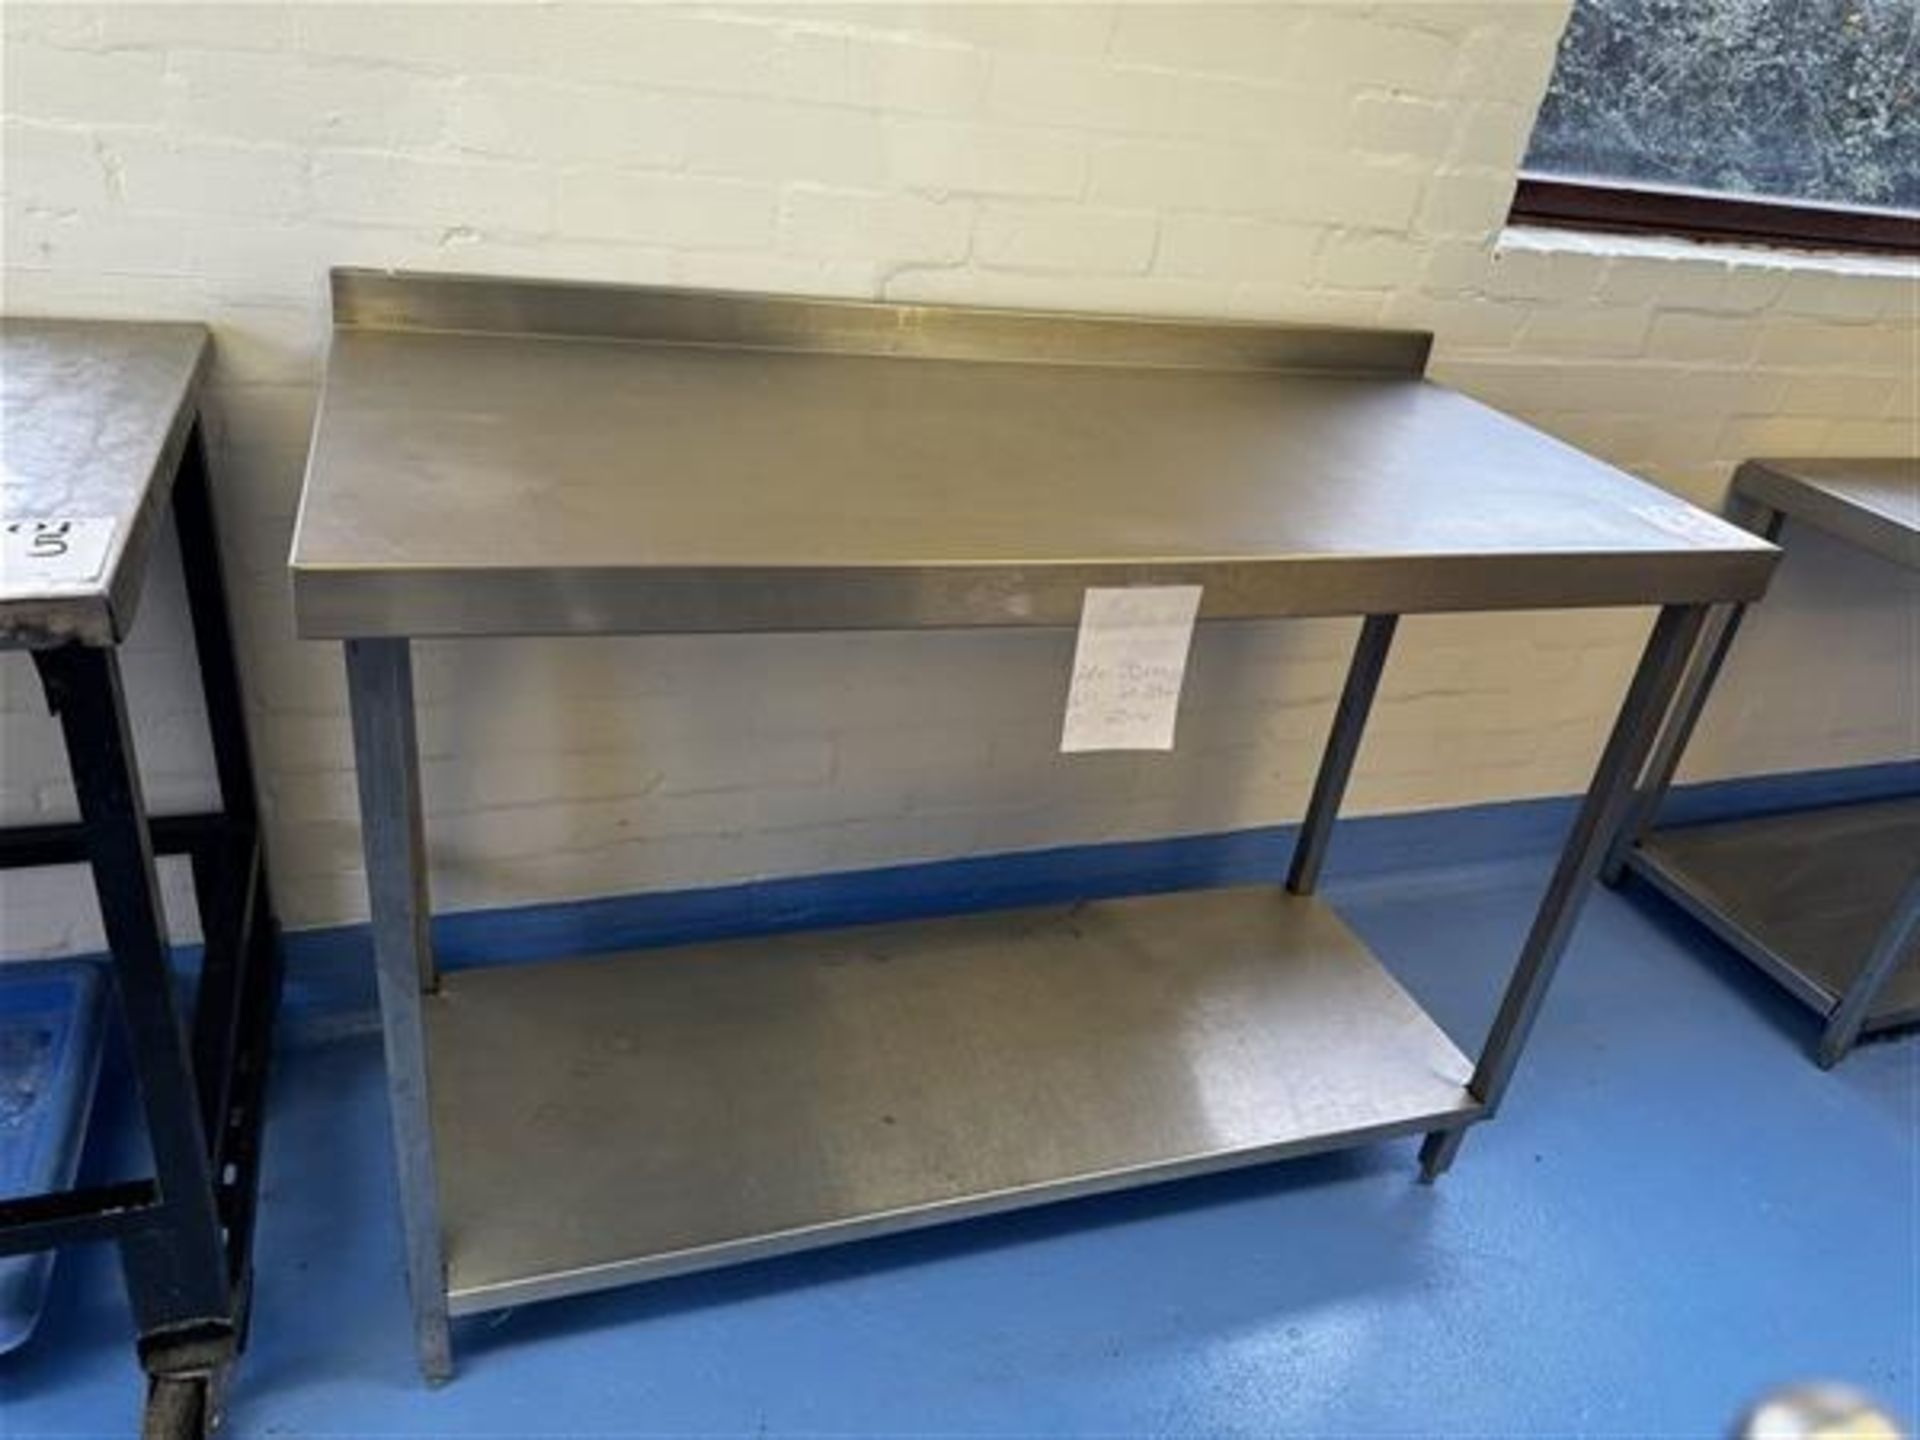 Stainless steel workbench, H 90cm x W 1.3m x D 60cm